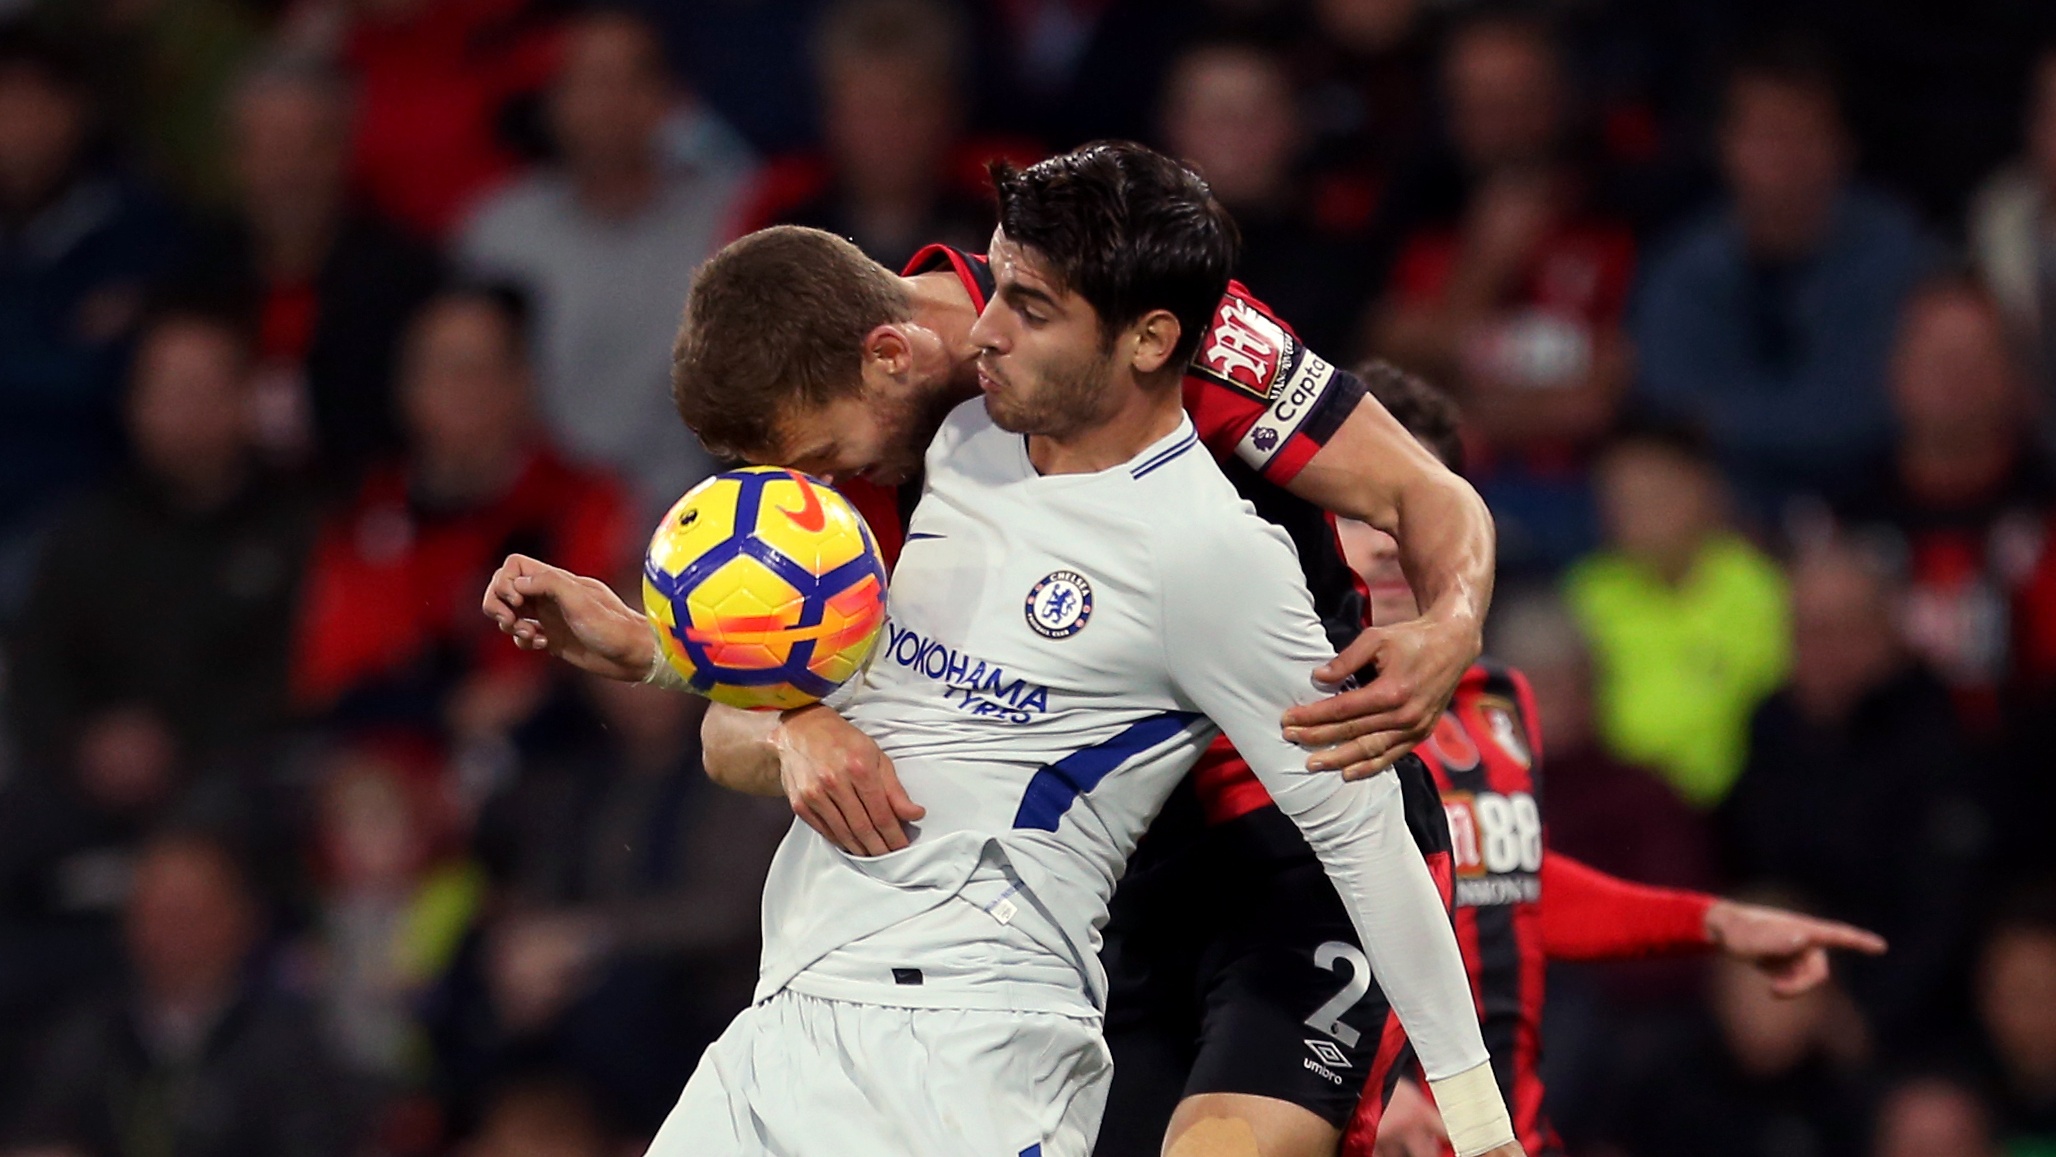 Chelsea's Alvaro Morata plays against Bournemouth in the Premier League